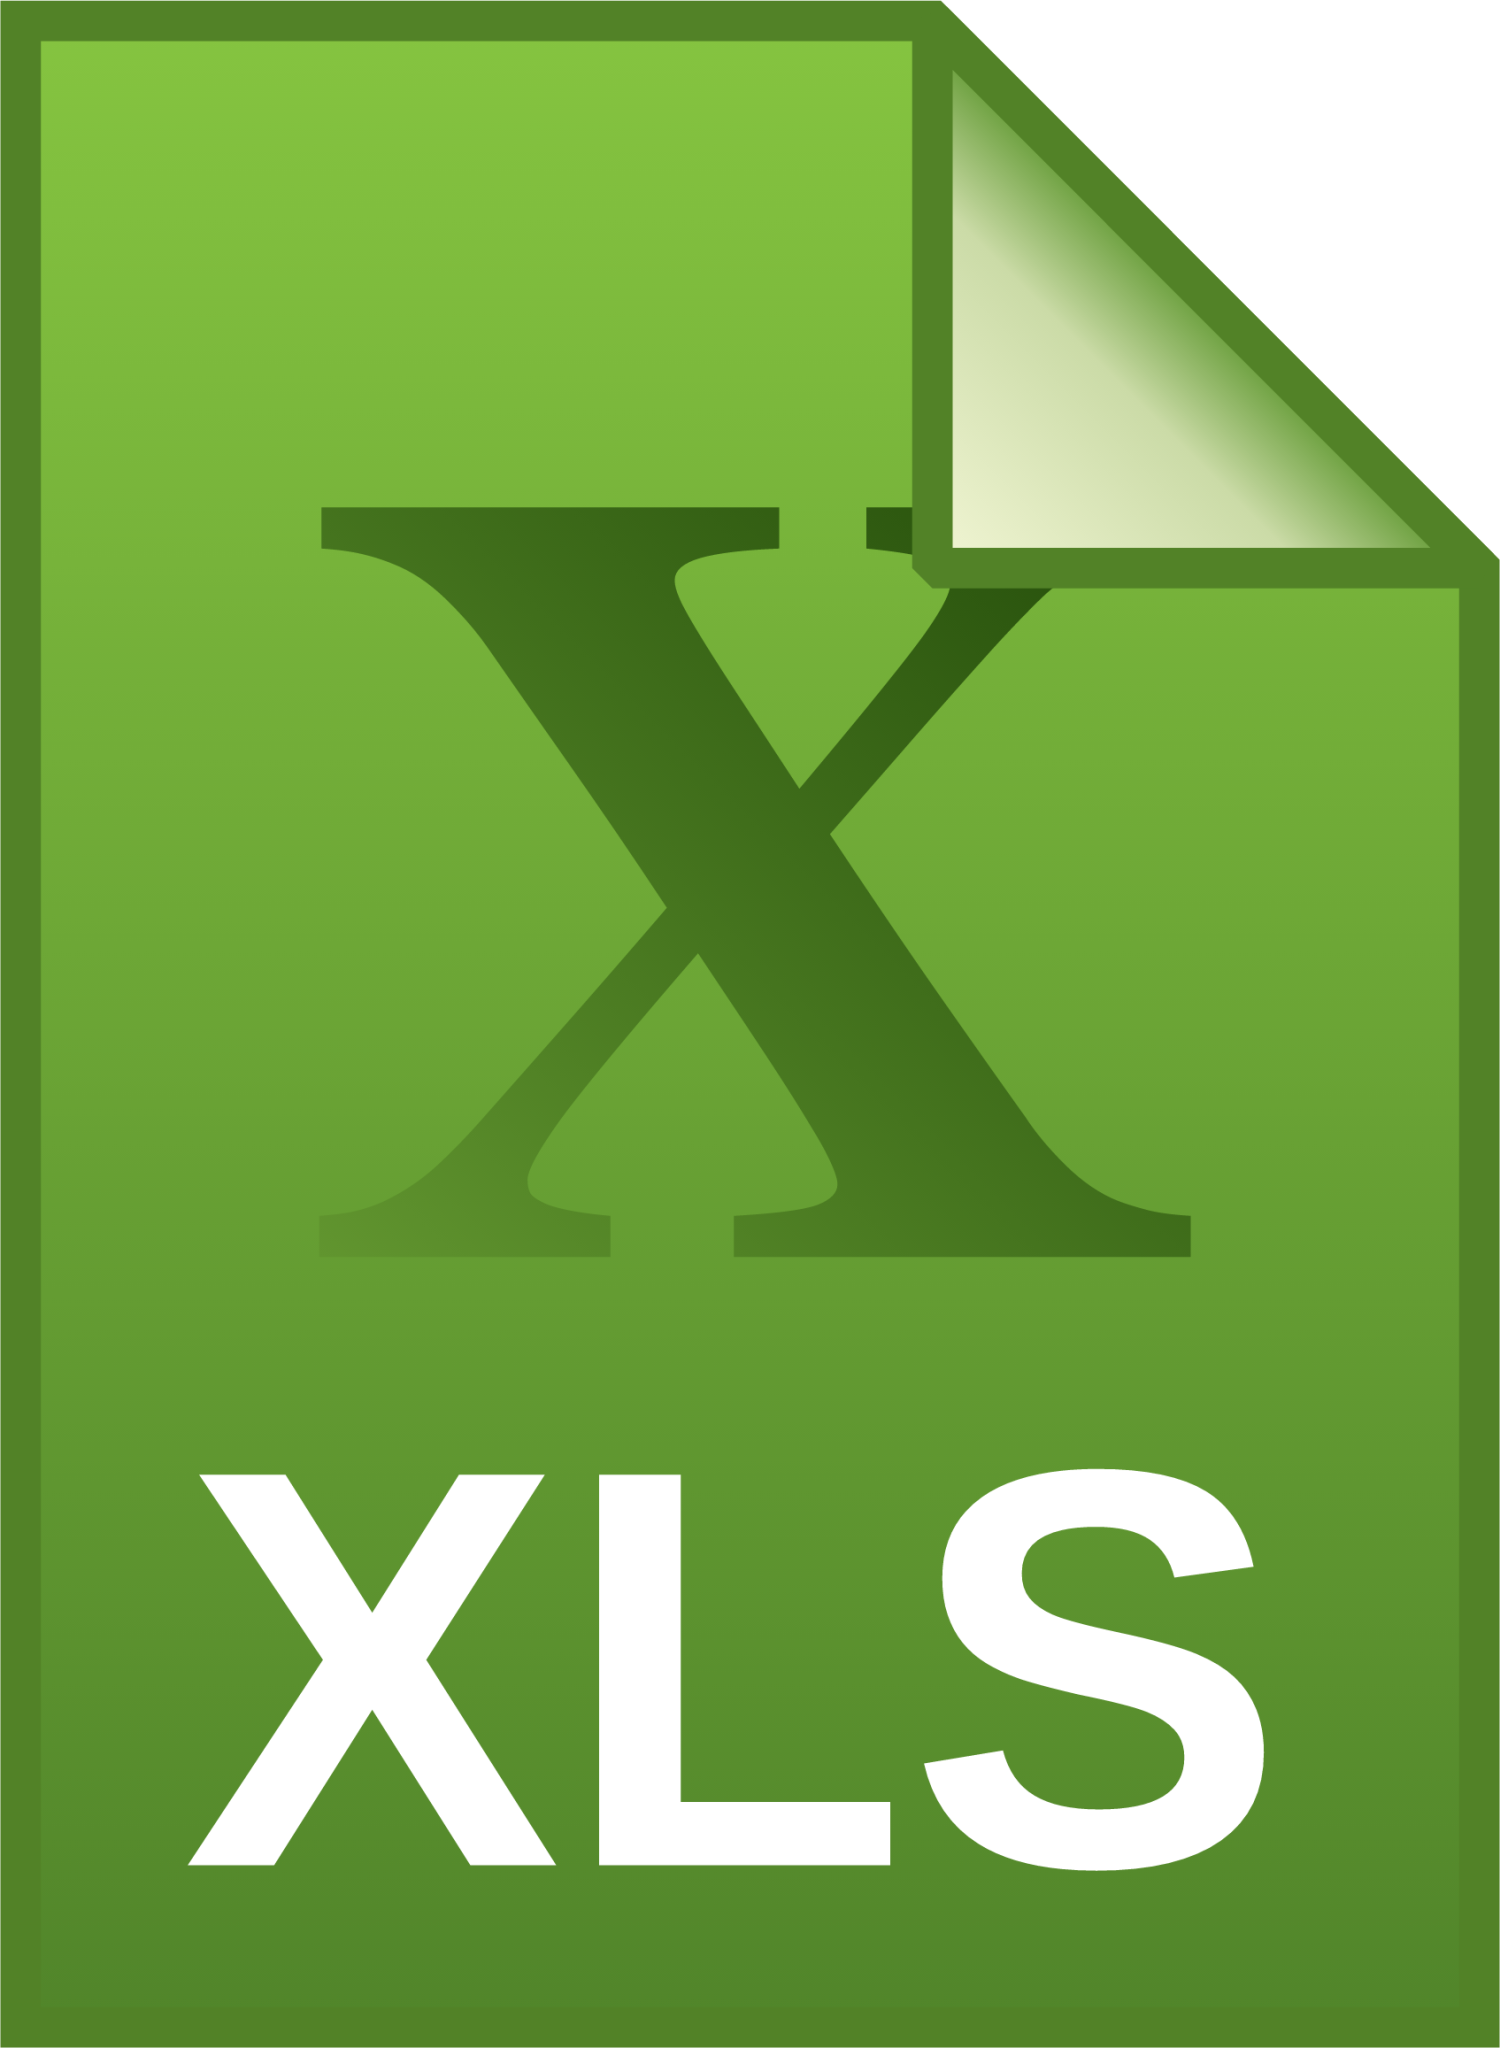 xls file icon